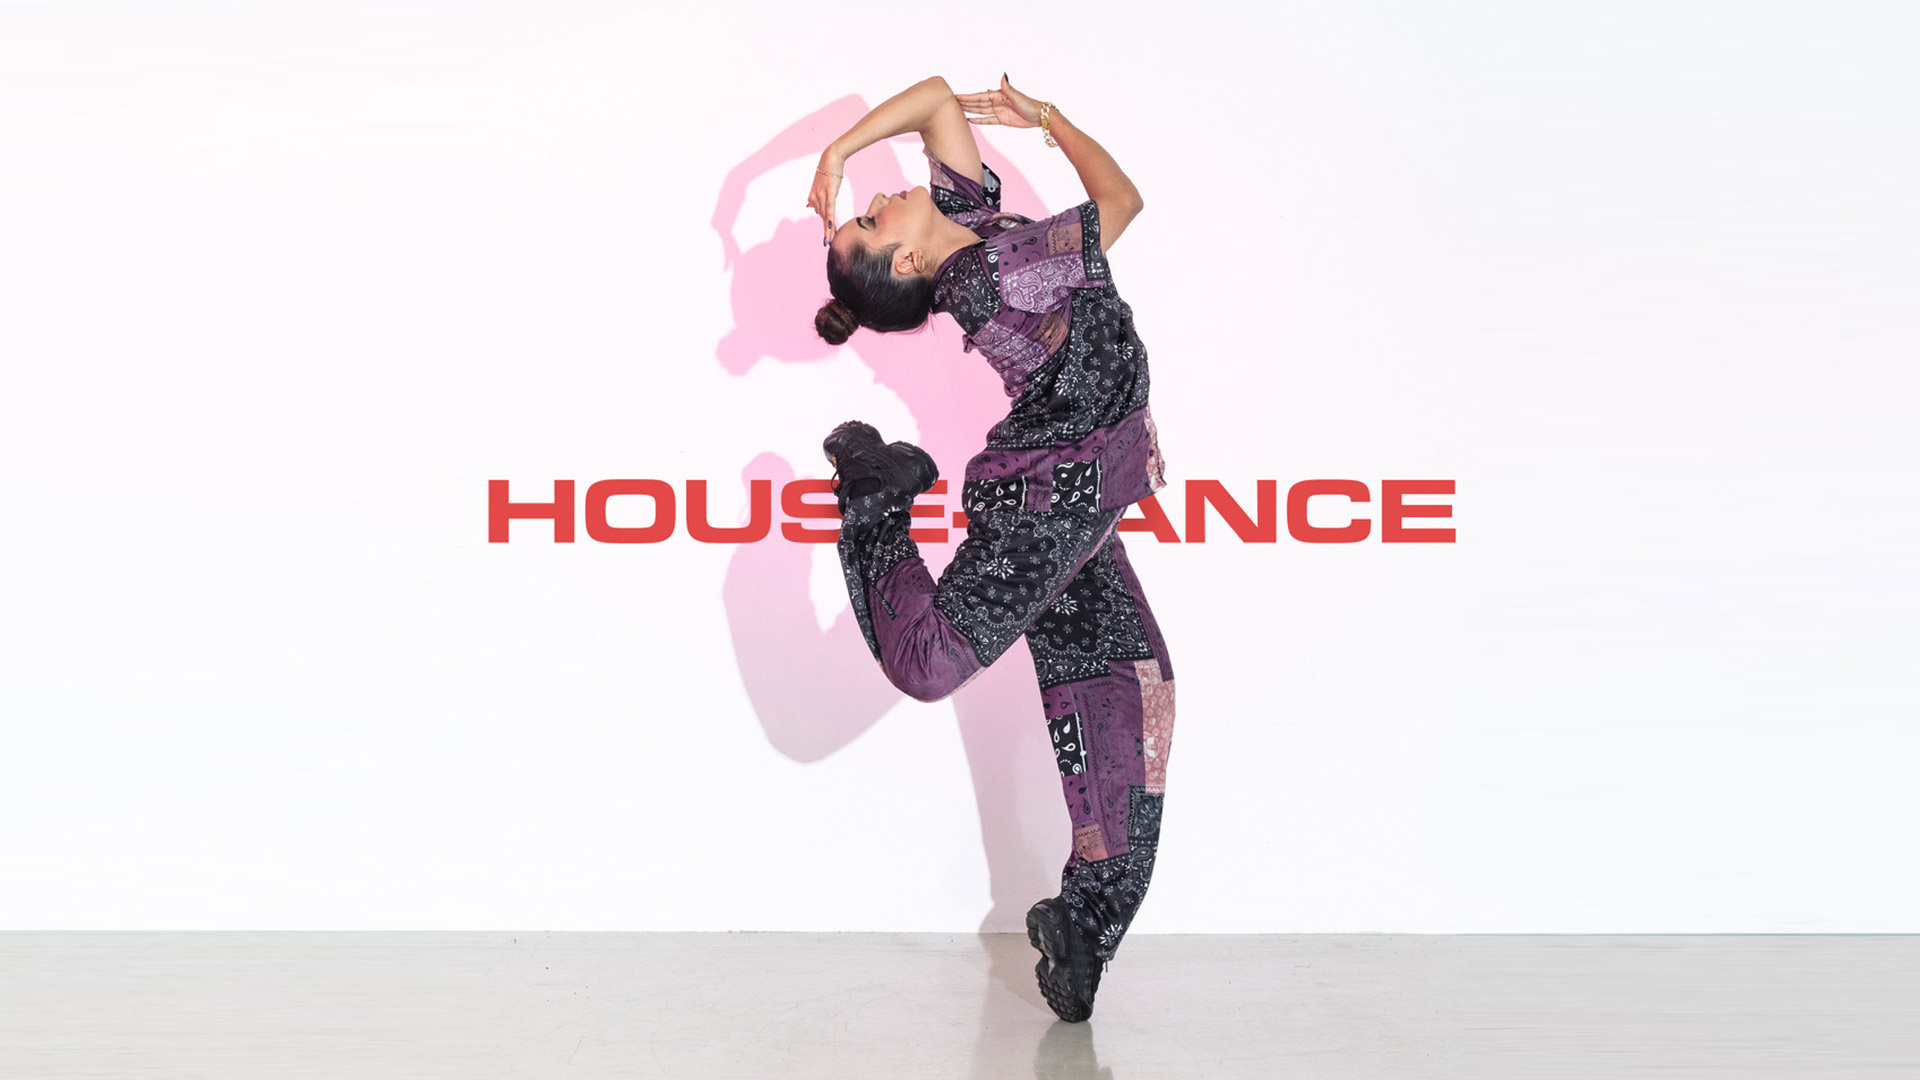 House Dance: Hip-hop, Break afrobeat, Voguing, A freestyle social street dance. 1920x1080 Full HD Background.